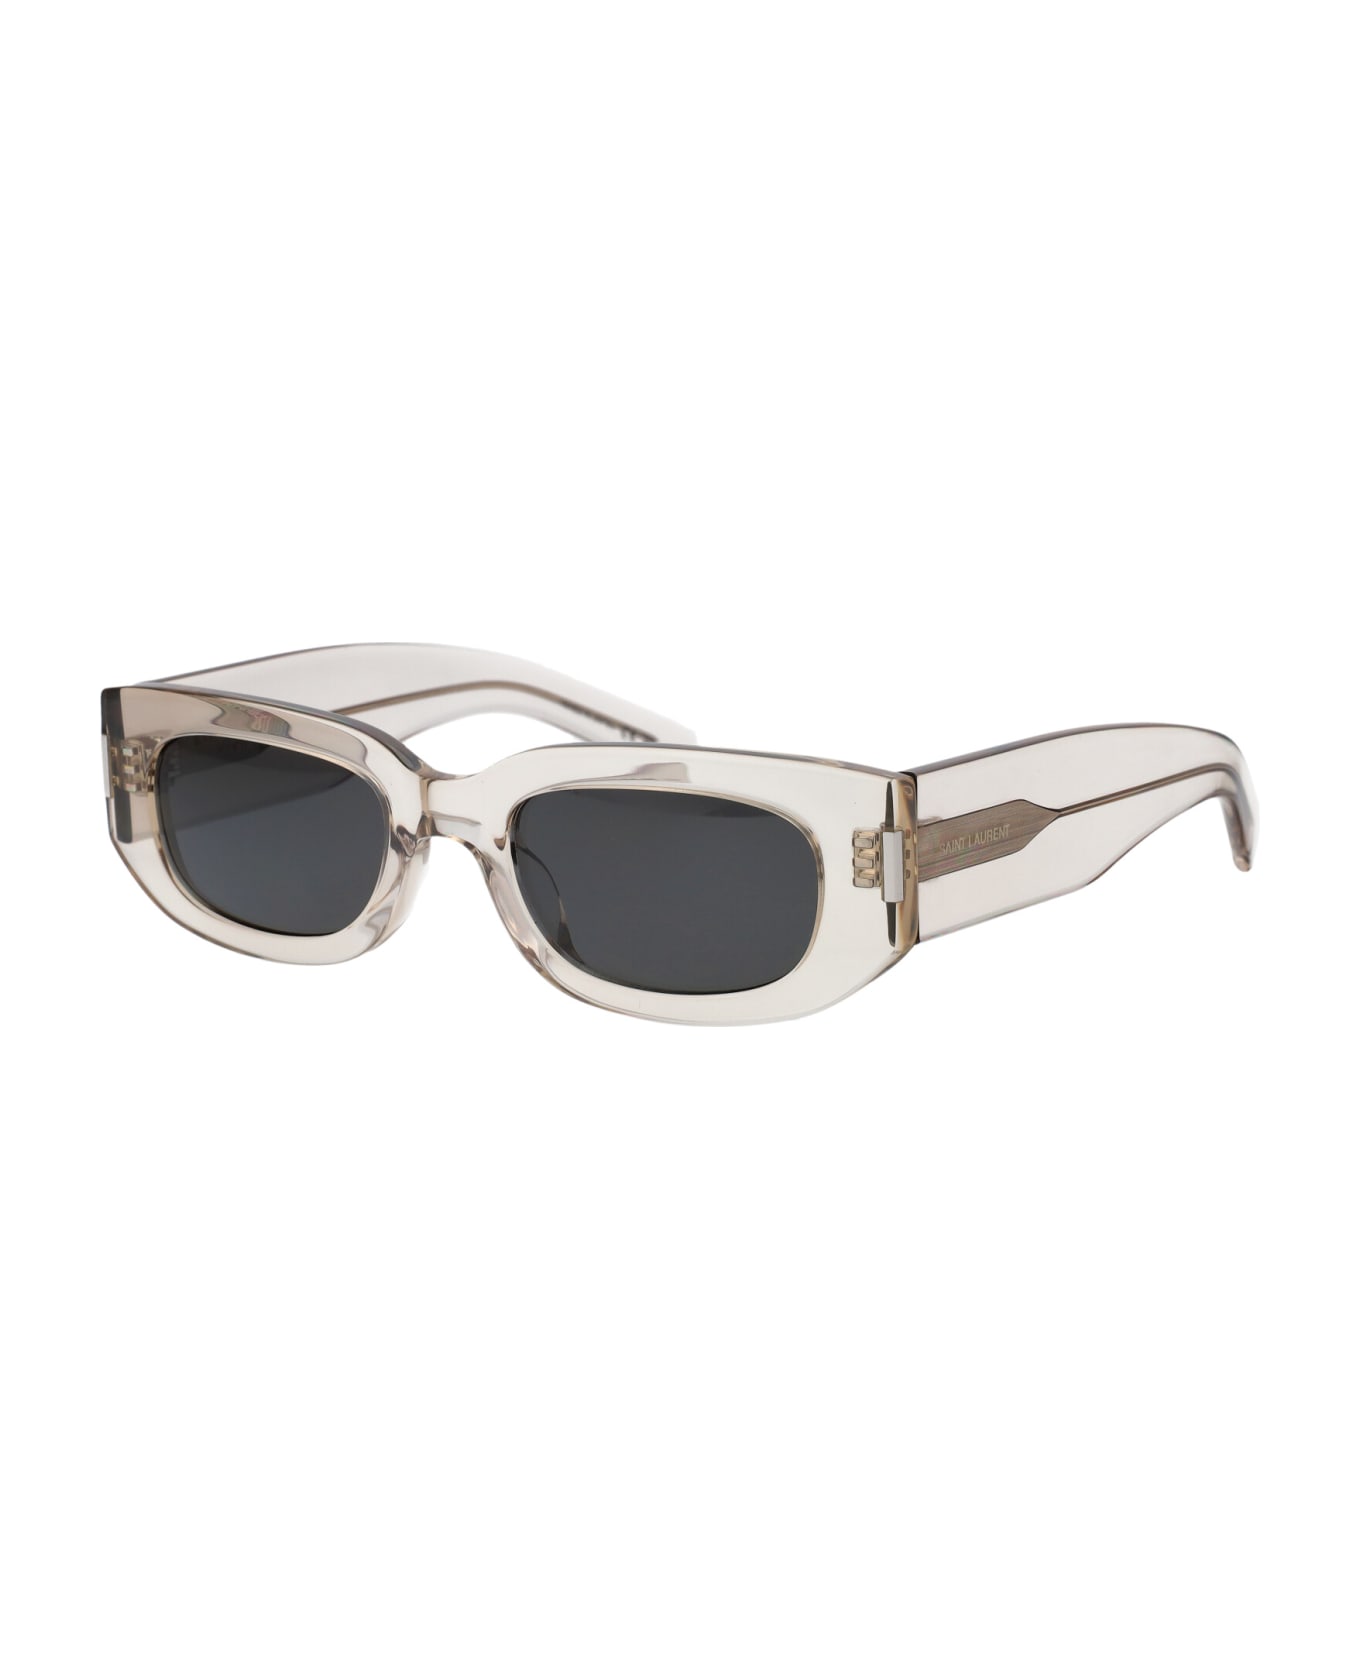 Saint Laurent Eyewear Sl 697 Sunglasses - 003 BEIGE BEIGE GREY